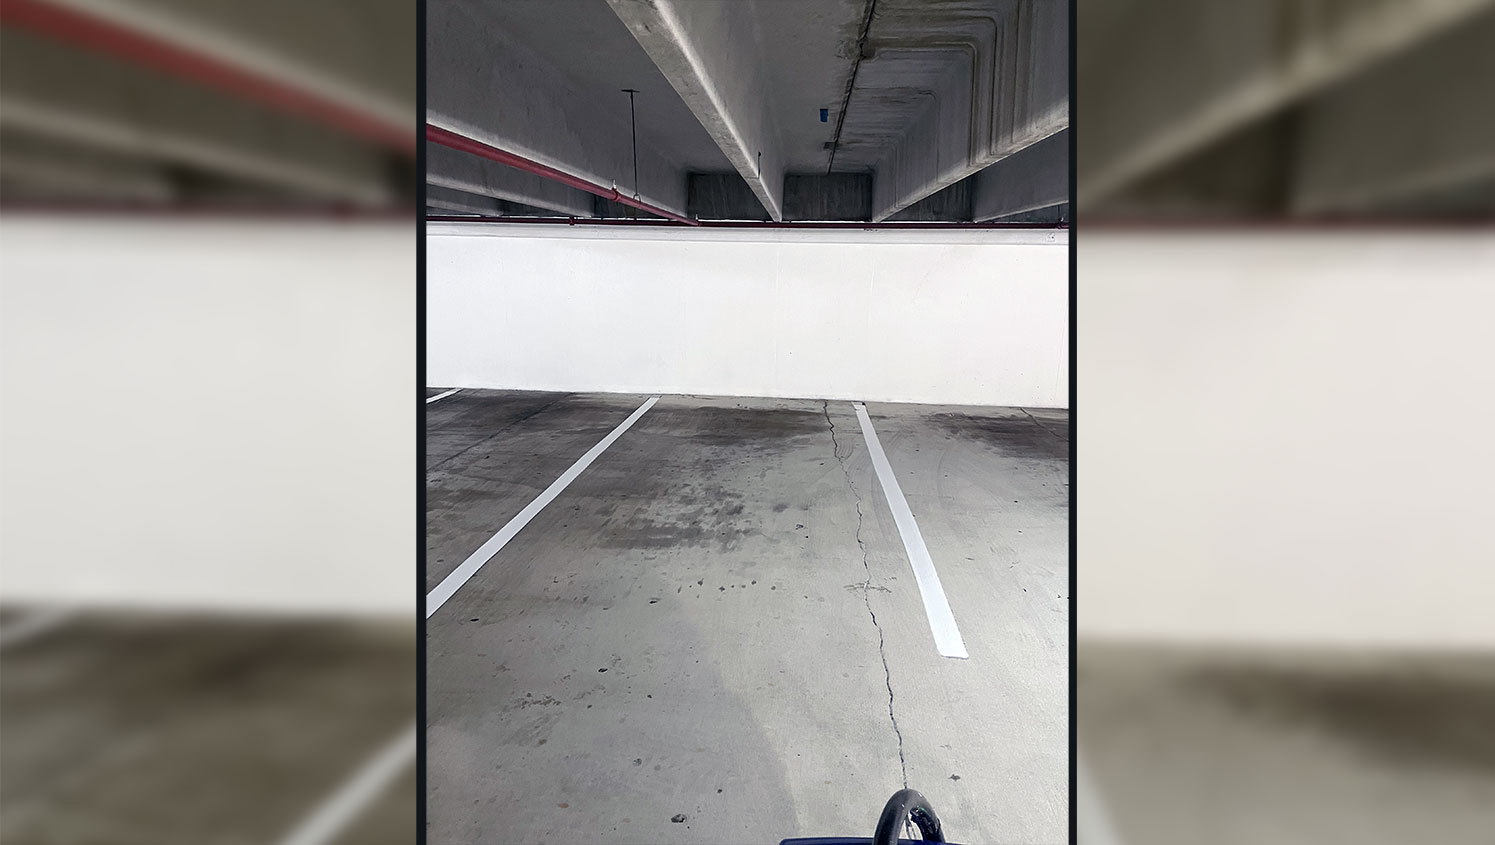 re-striped parking spaces inside parking garage